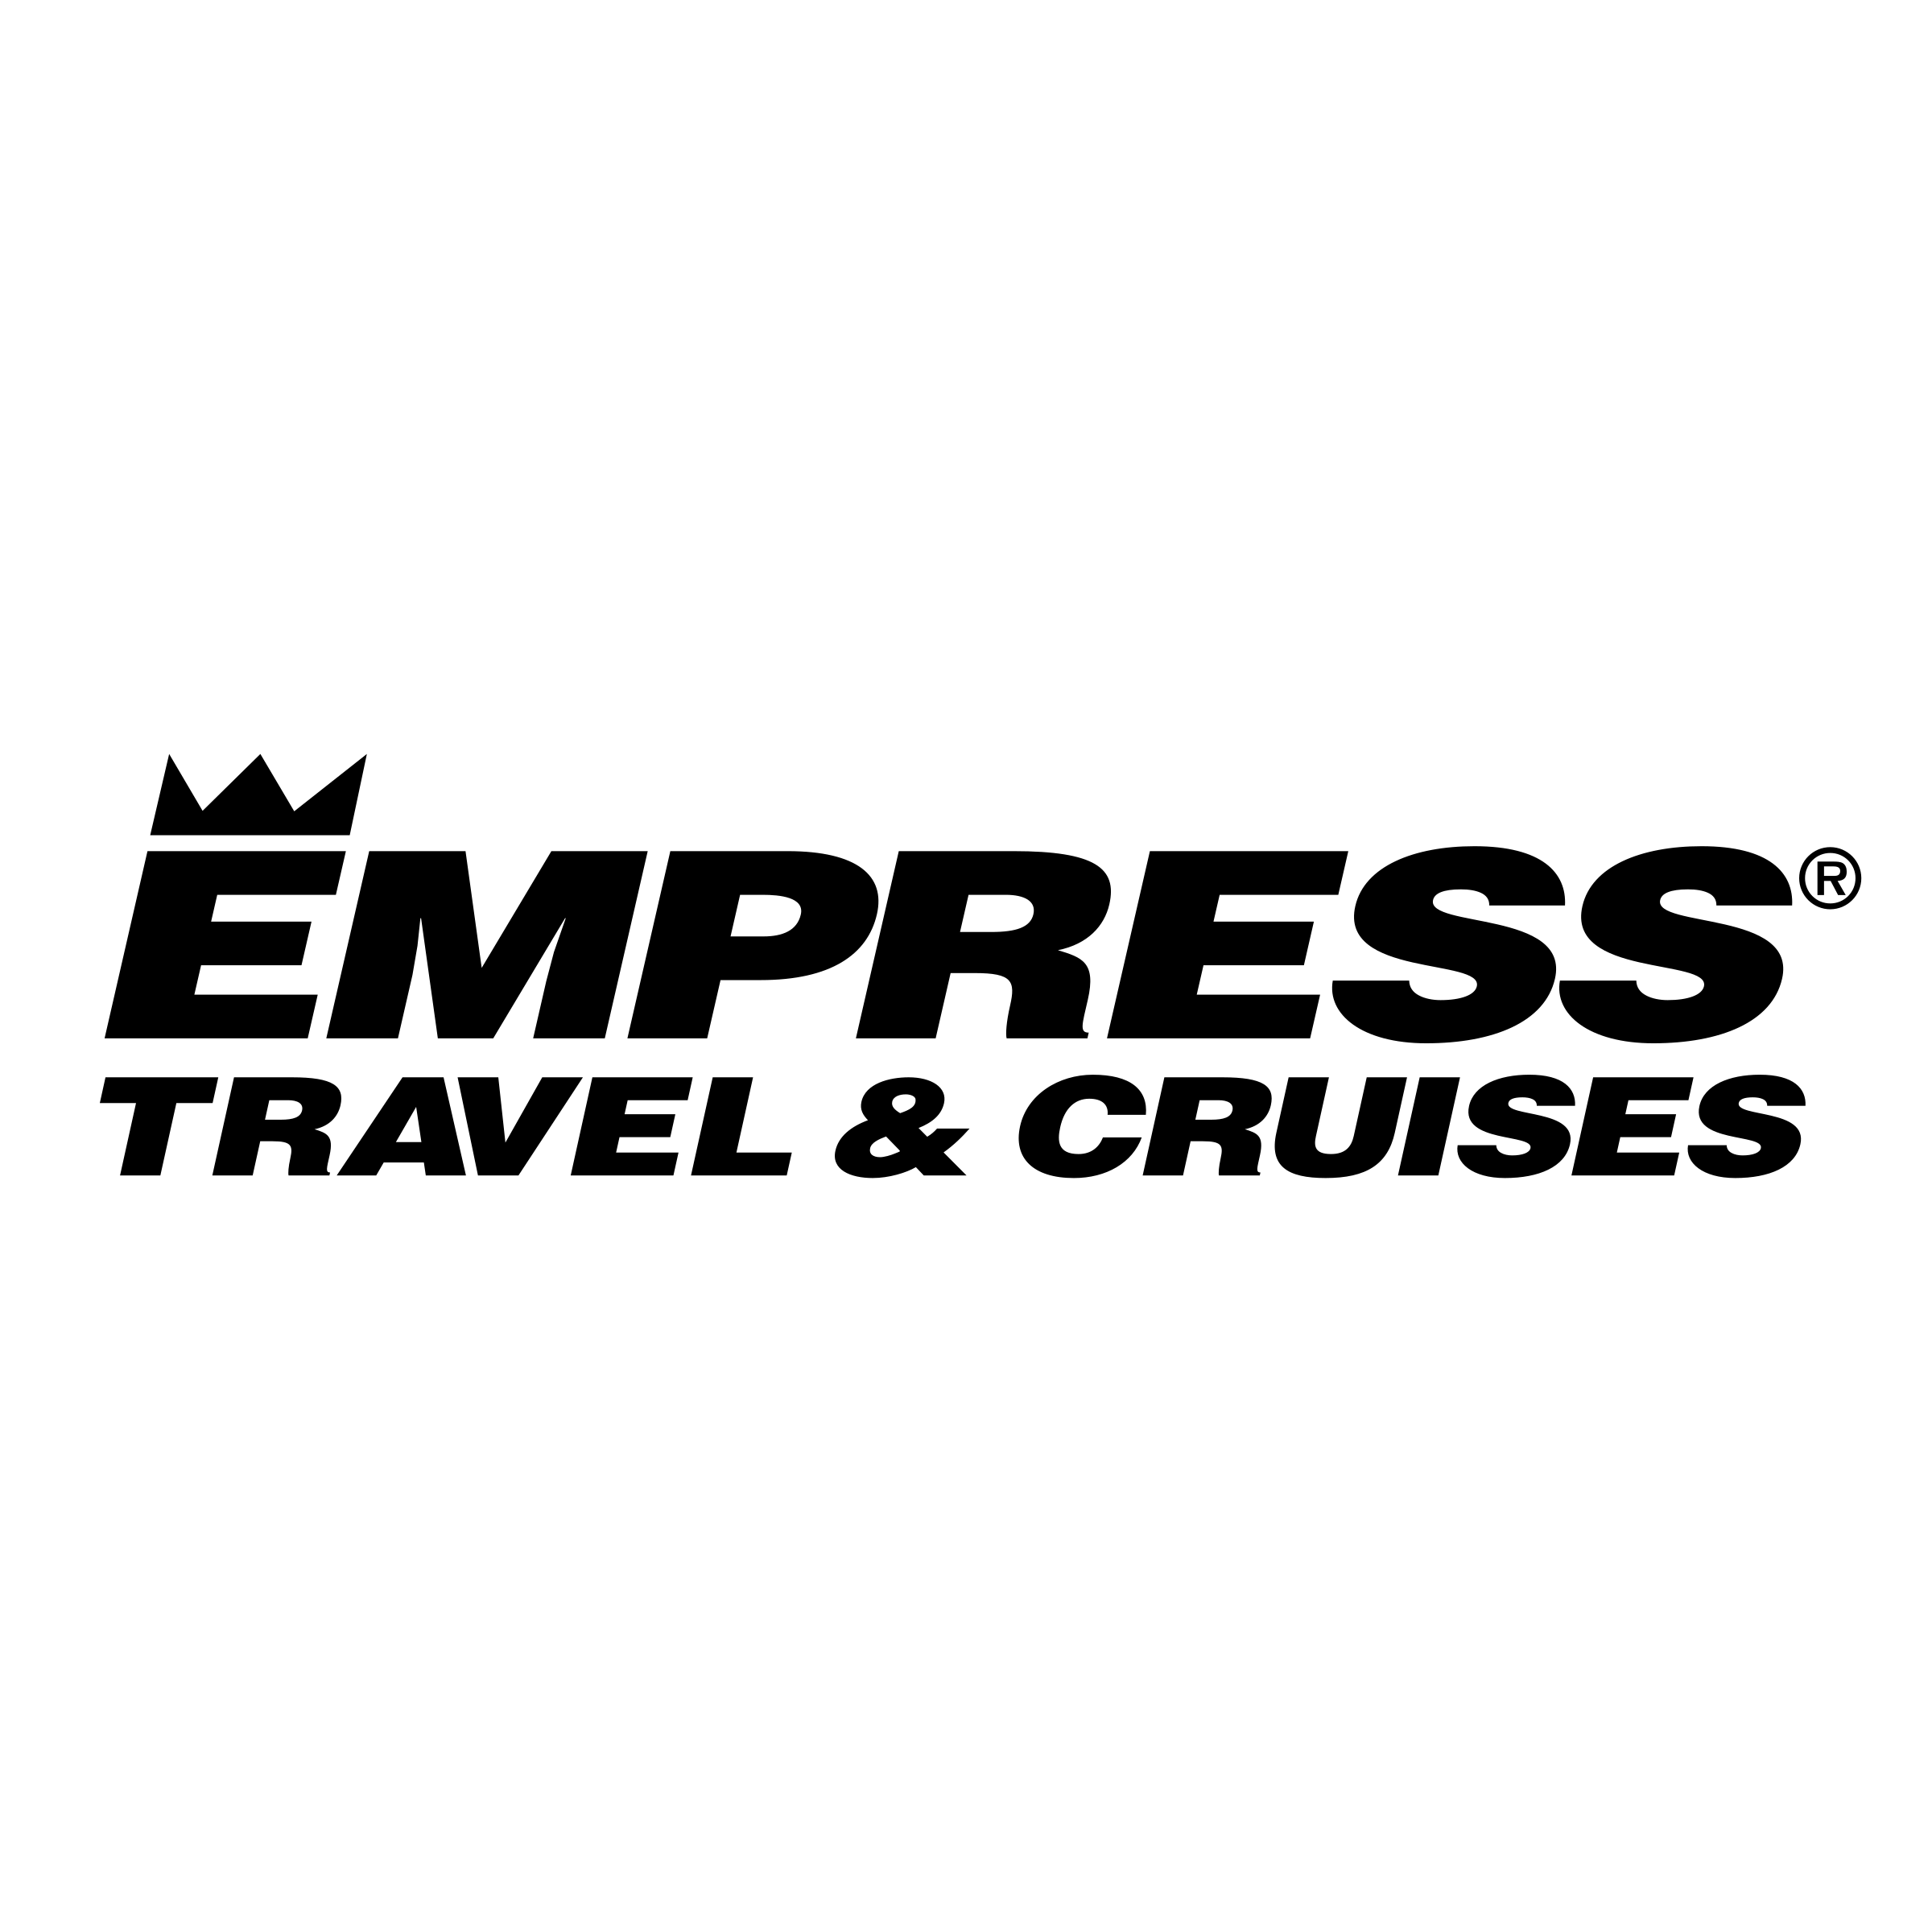 Empress Logo - Empress Logo PNG Transparent & SVG Vector - Freebie Supply